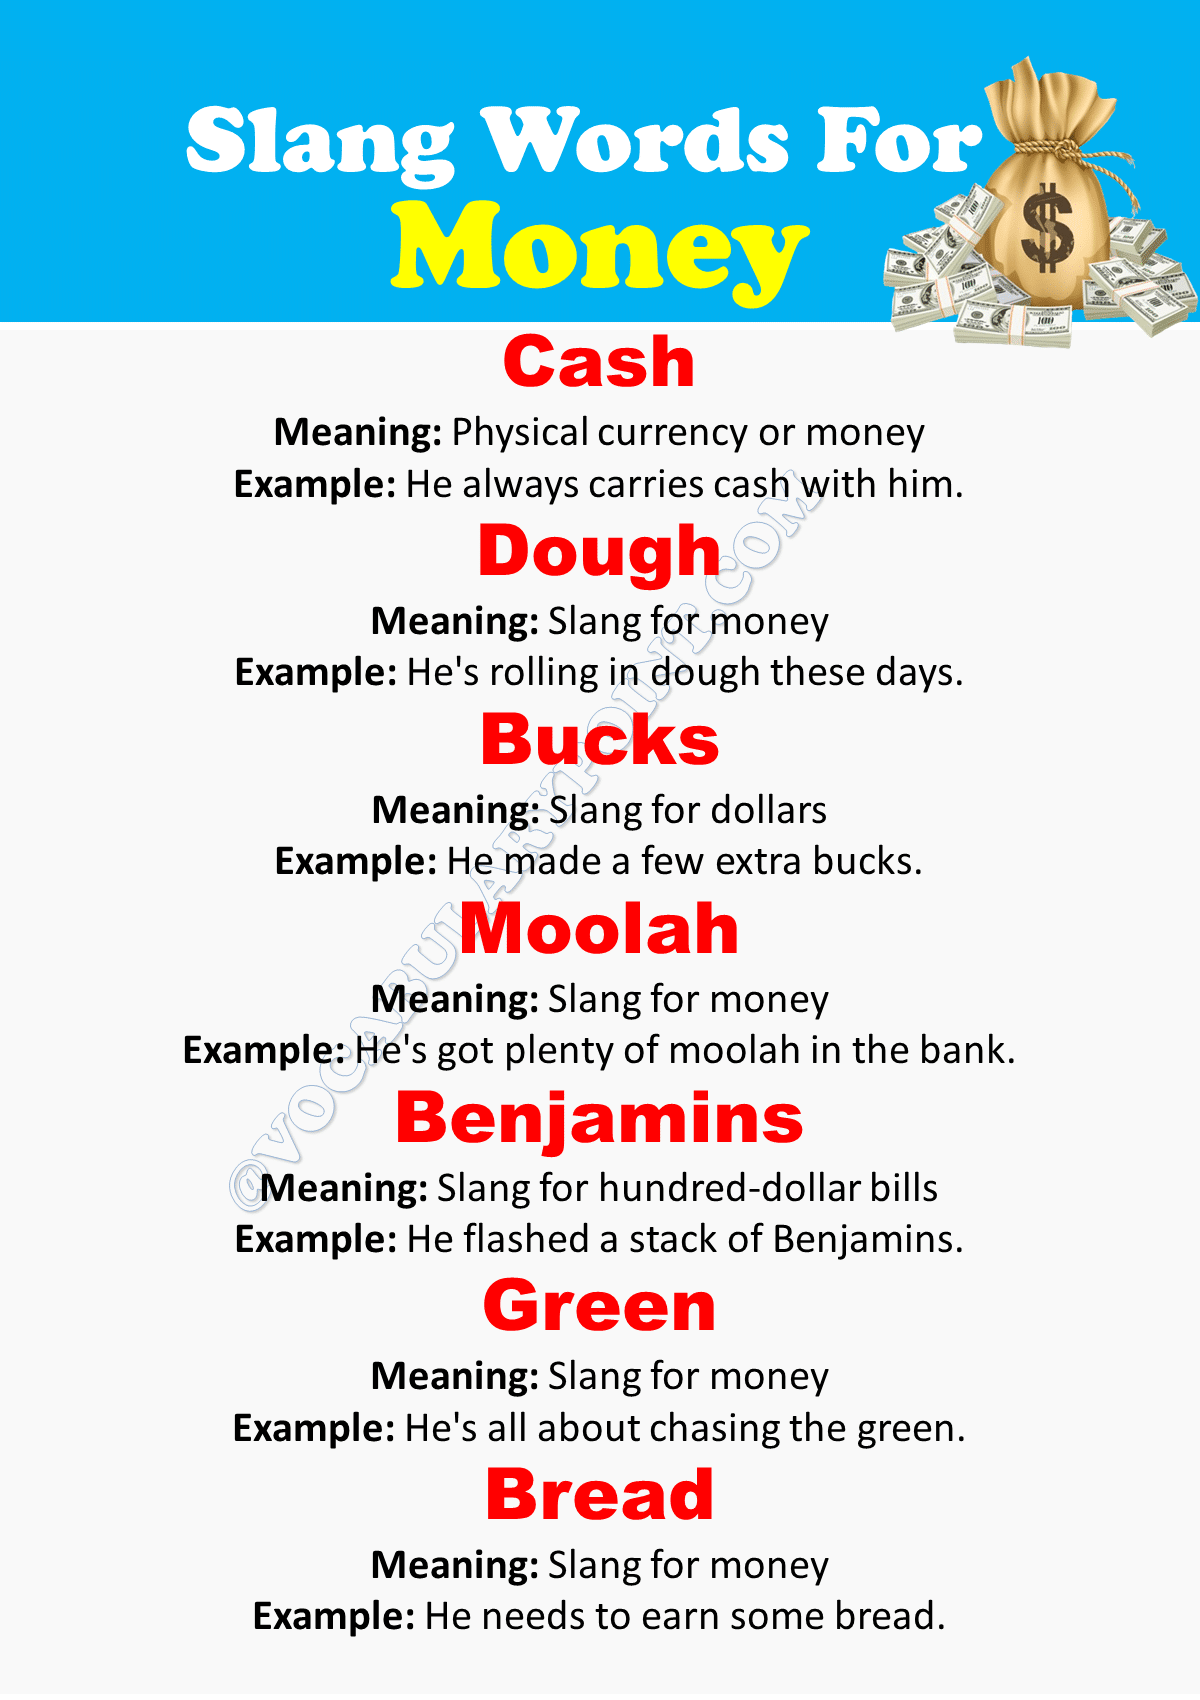 Slang Word for Money